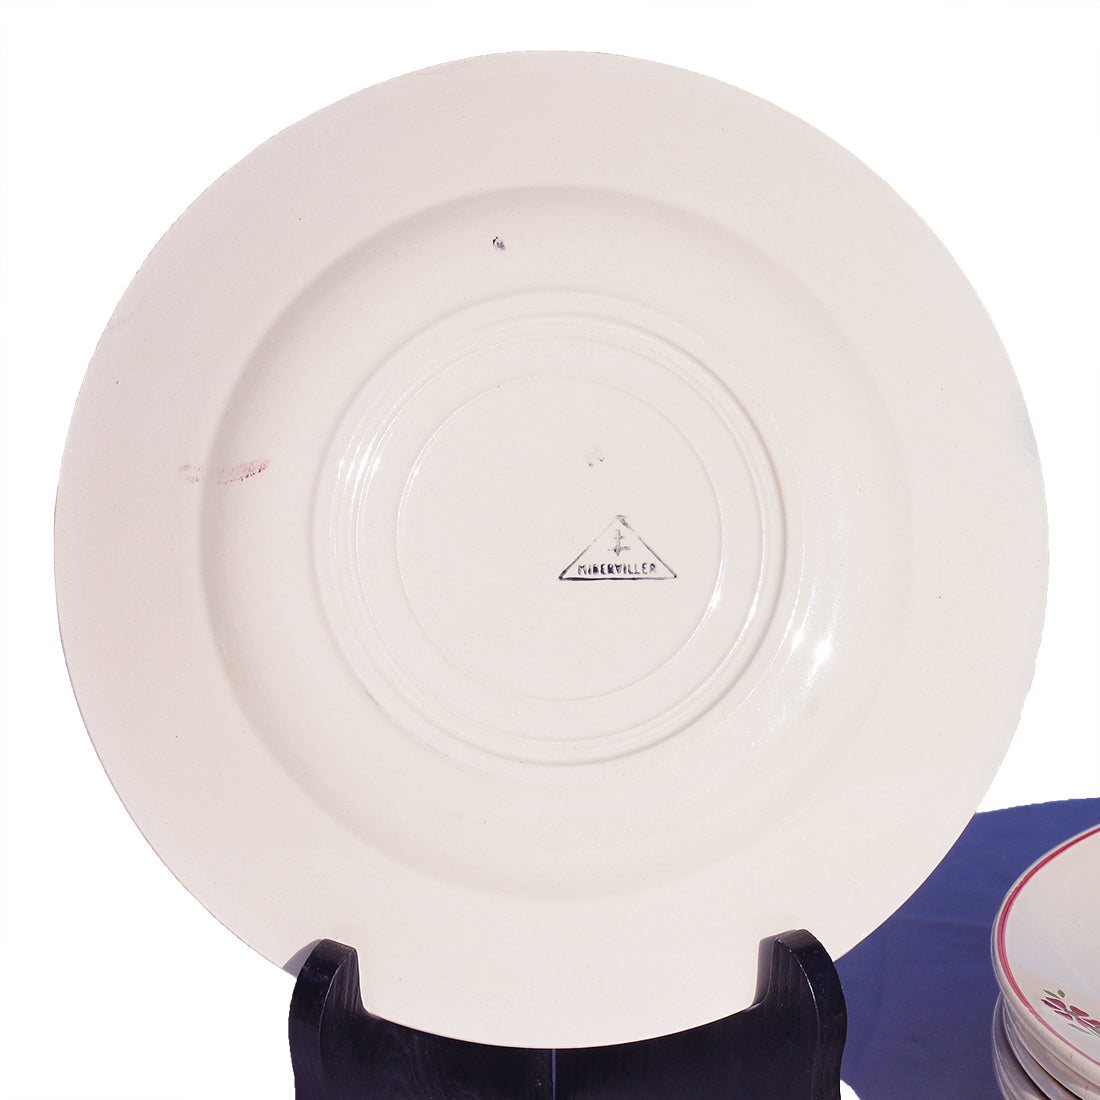 Assiettes plates (lot de 6) - Niderviller - Fontenay - Brocante en ligne